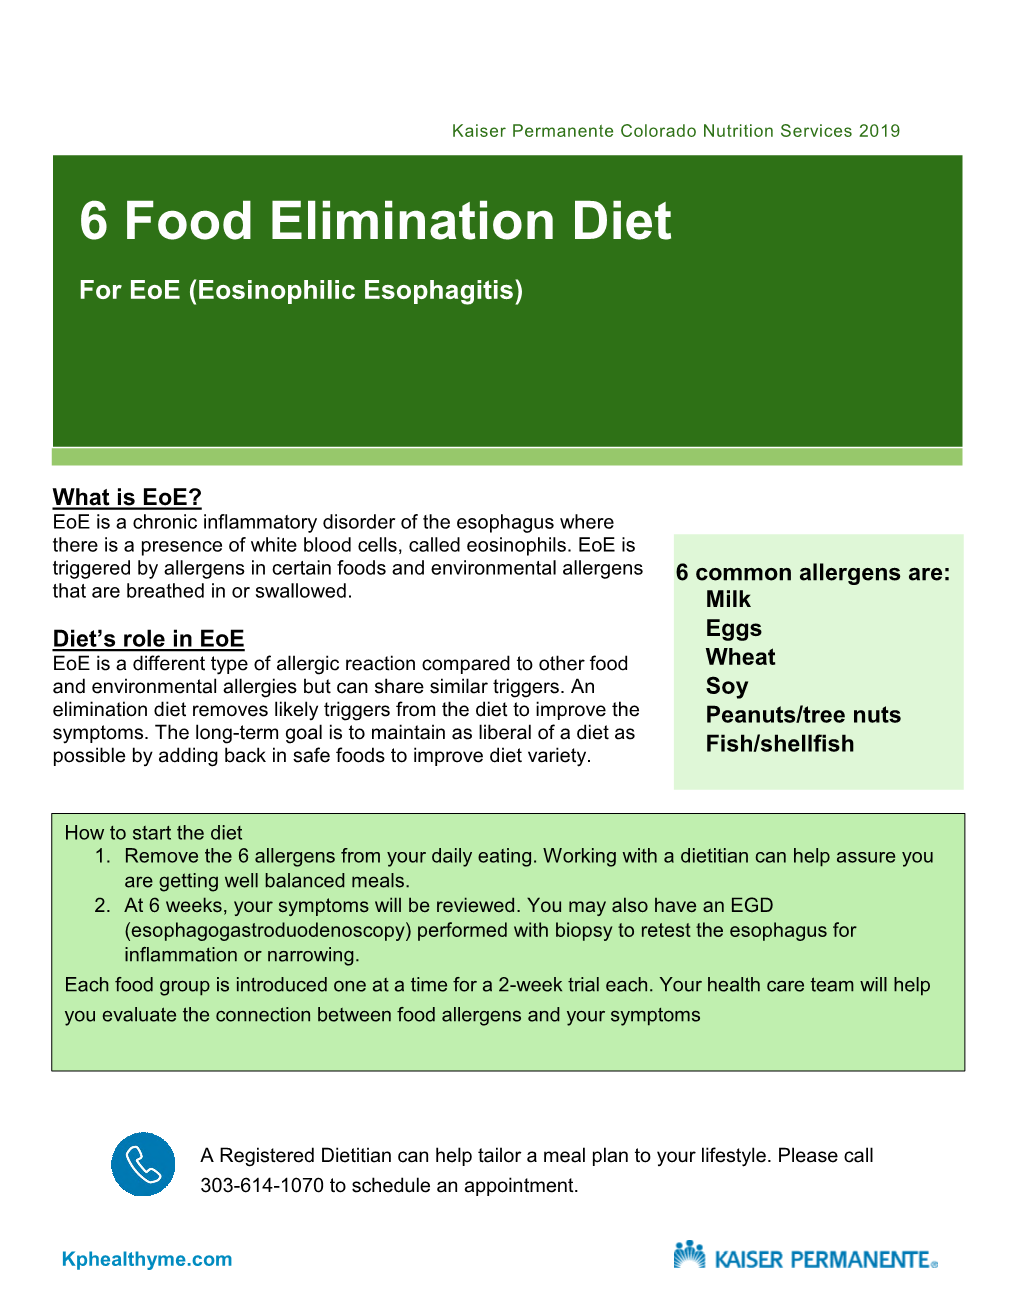 6 Food Elimination Diet for Eoe (Eosinophilic Esophagitis)